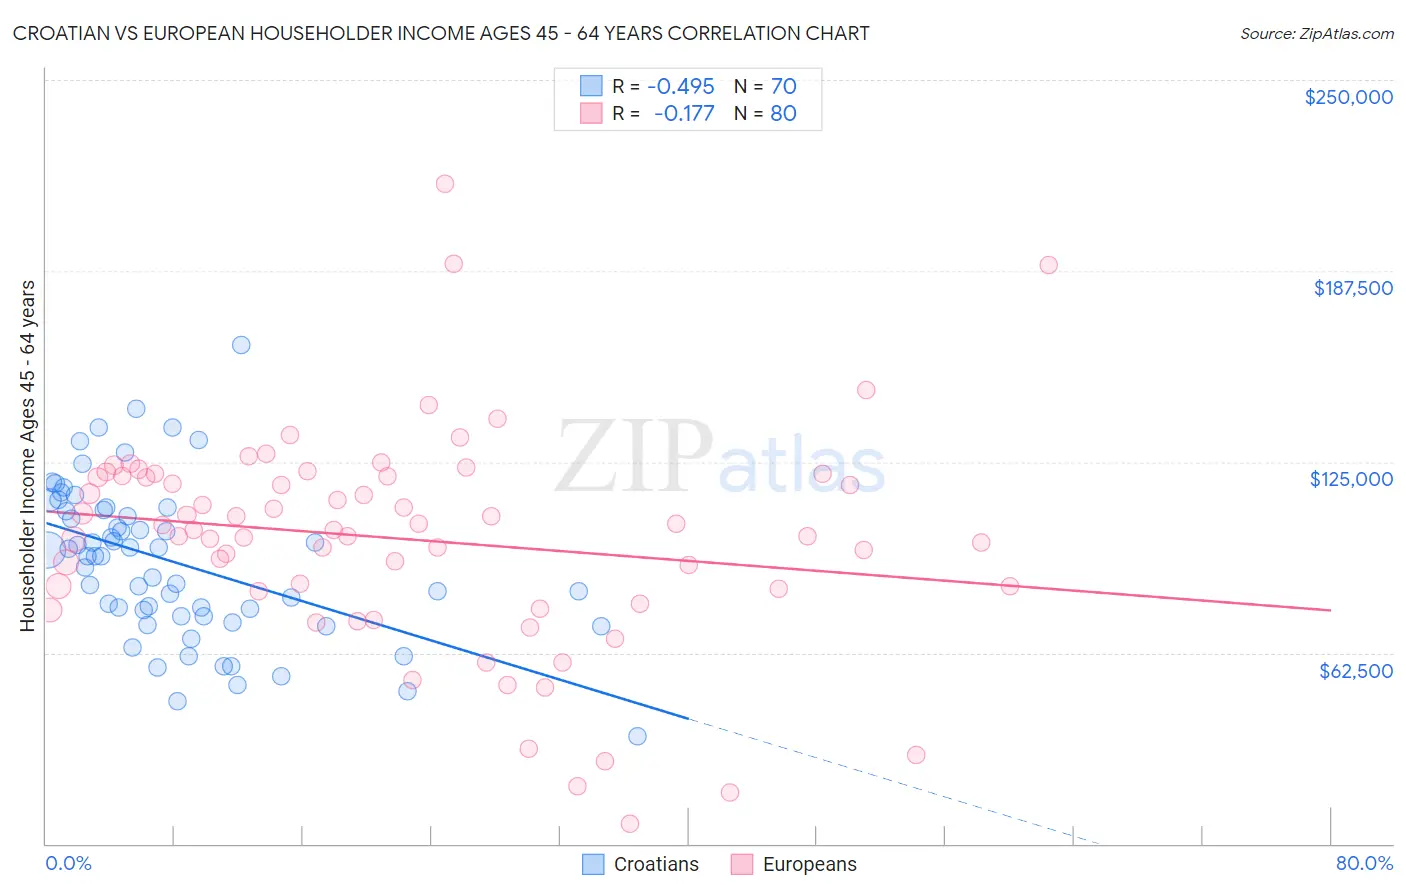 Croatian vs European Householder Income Ages 45 - 64 years